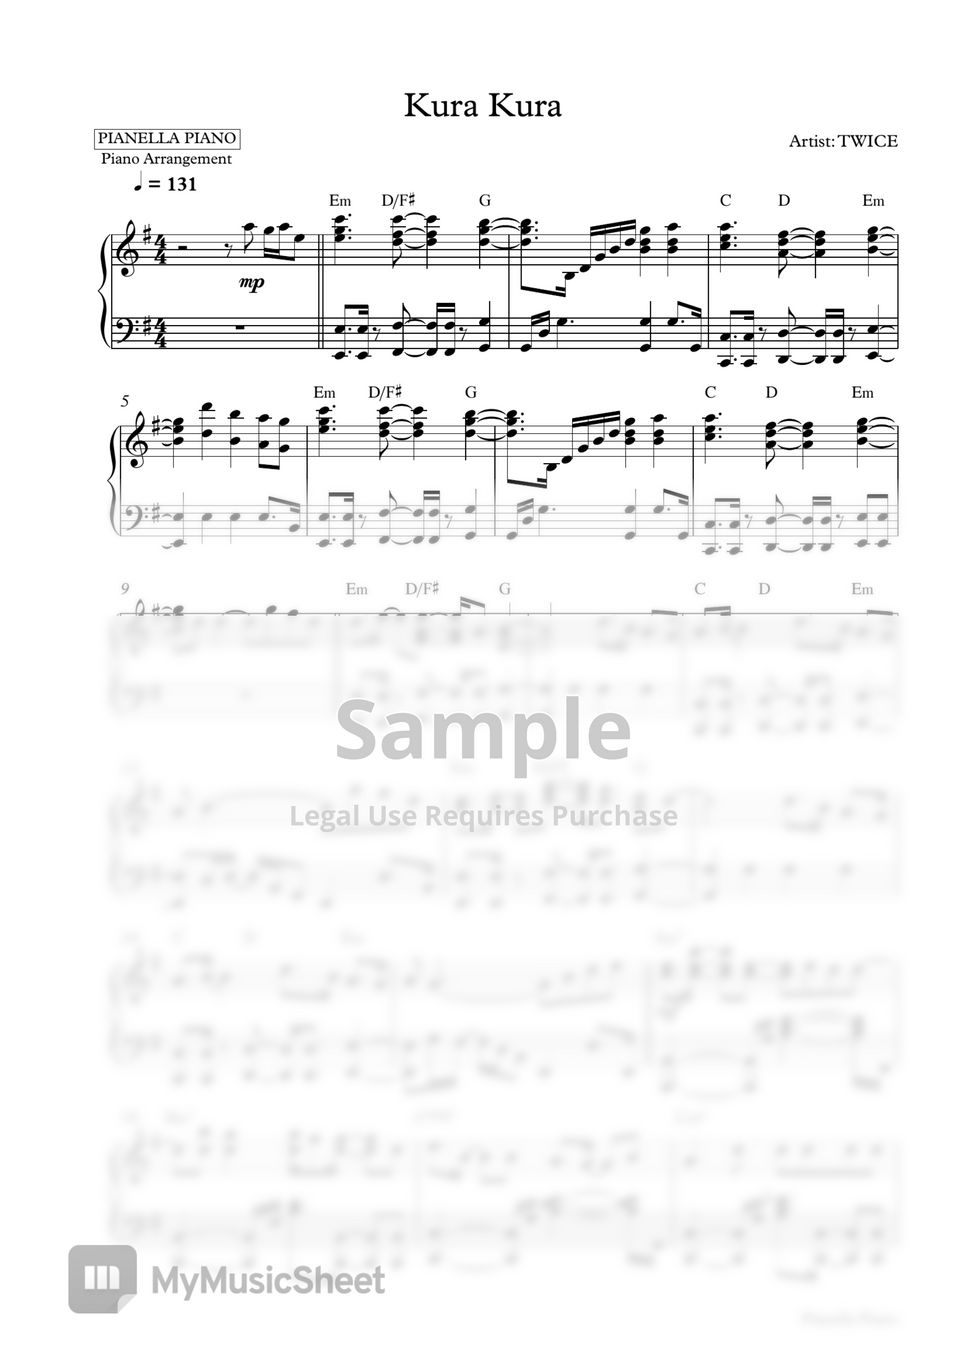 TWICE - Kura Kura (Piano Sheet) by Pianella Piano